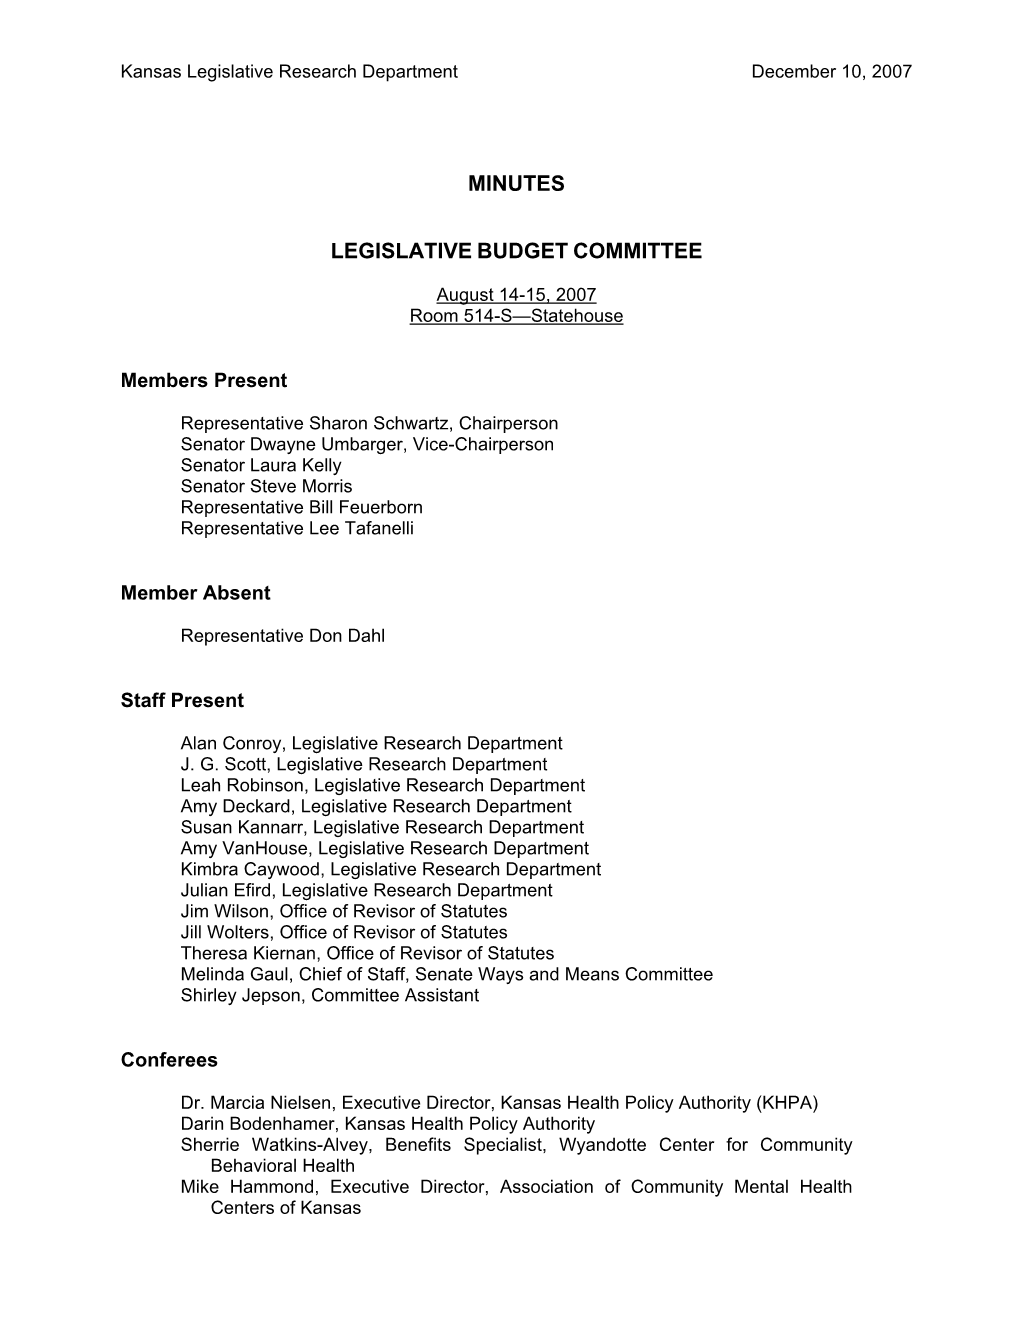 Minutes Legislative Budget Committee